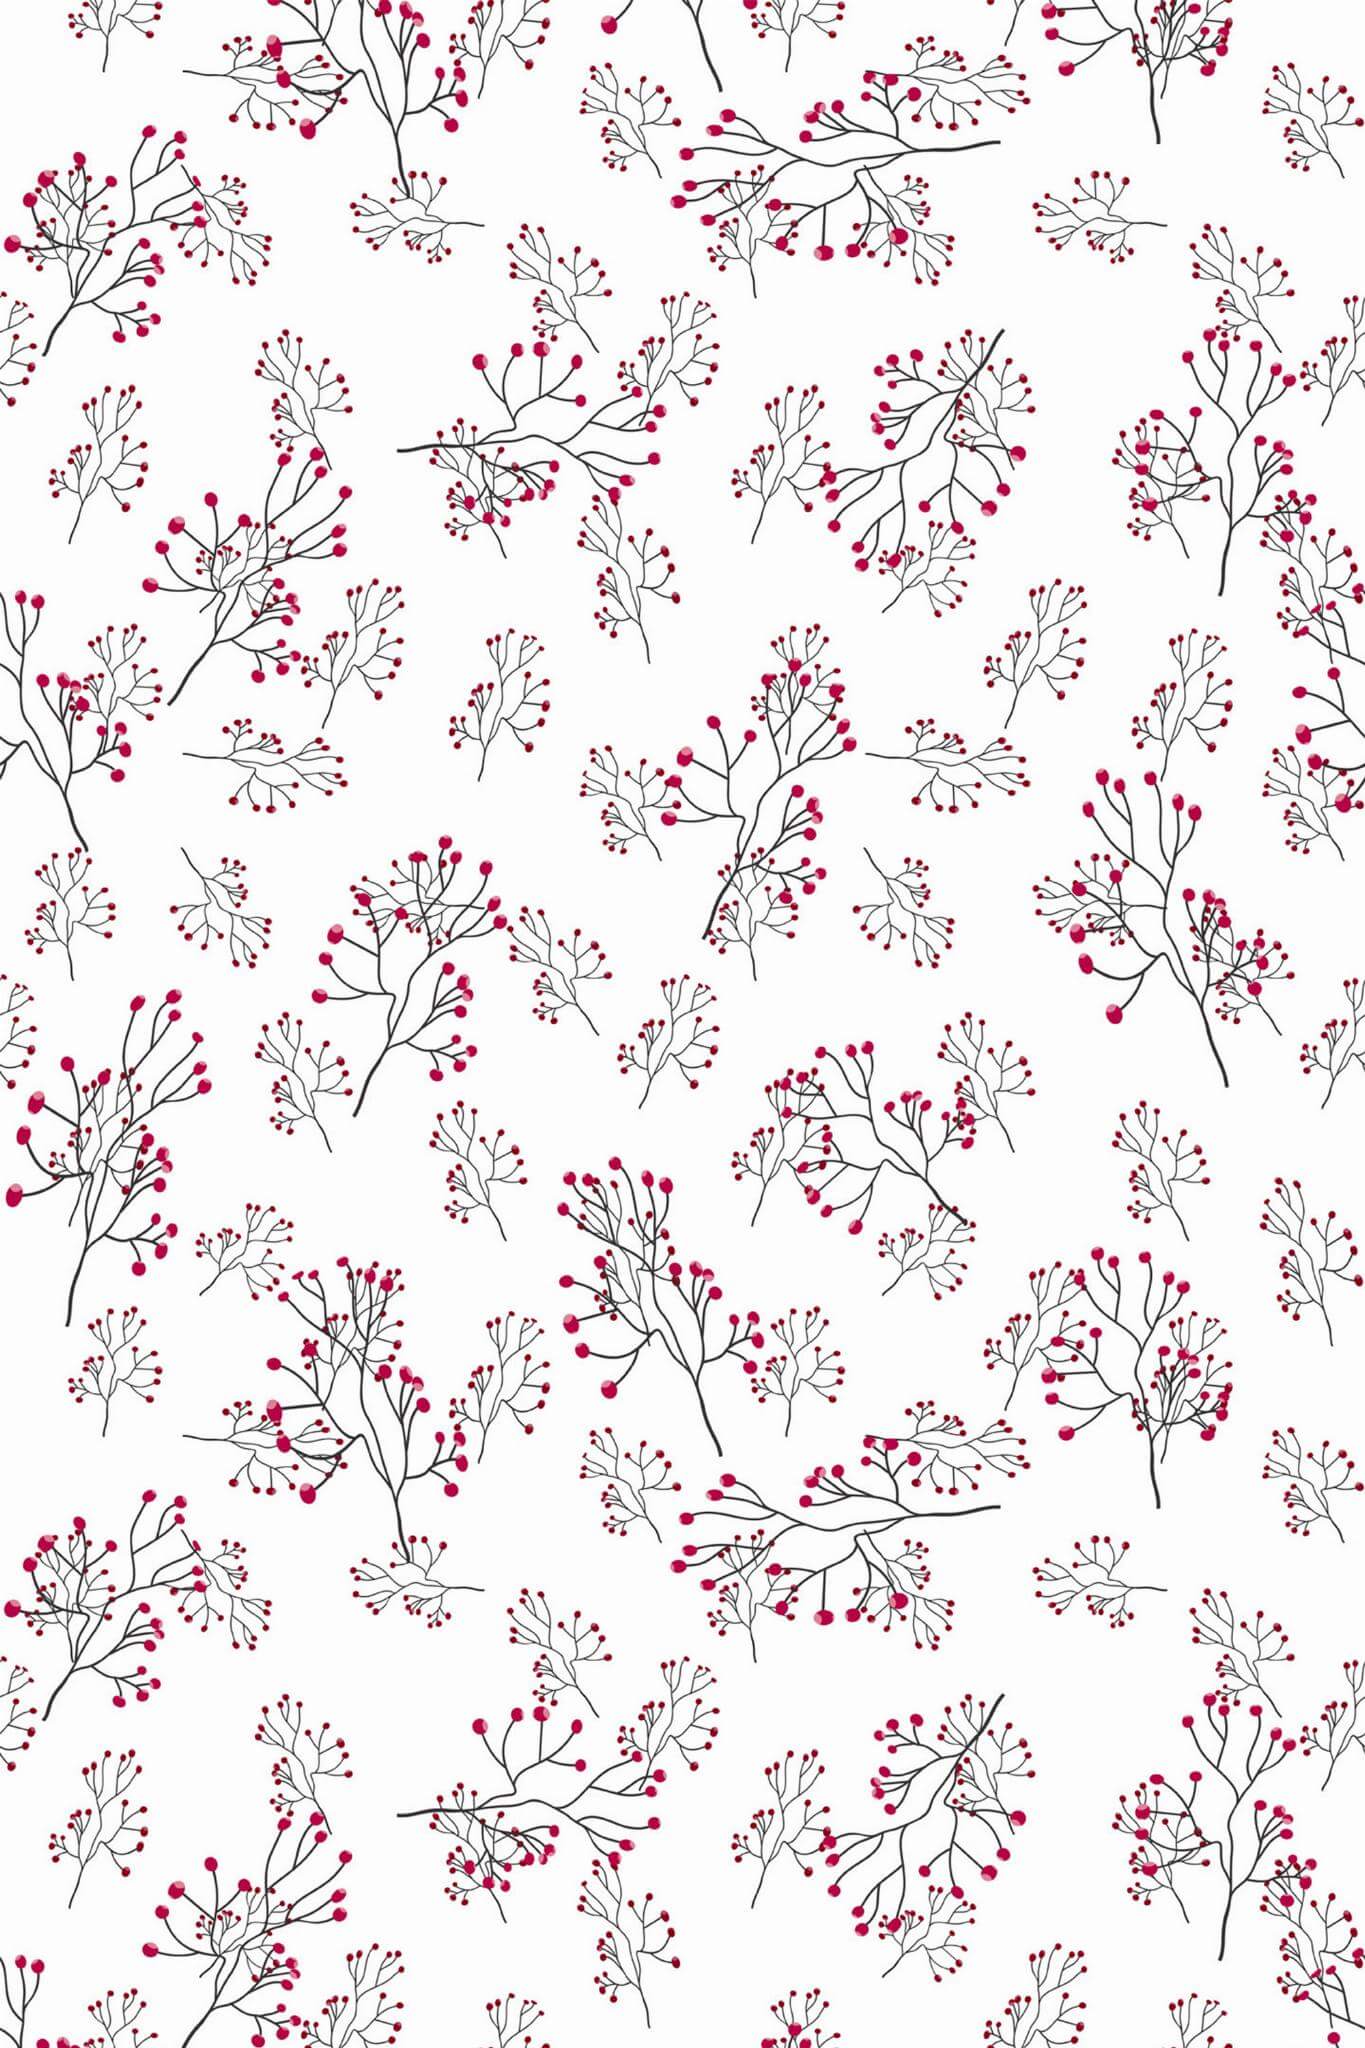 https://fancywalls.eu/wp-content/uploads/ditsy-floral-pattern-repeat-removable-wallpaper-design.jpg